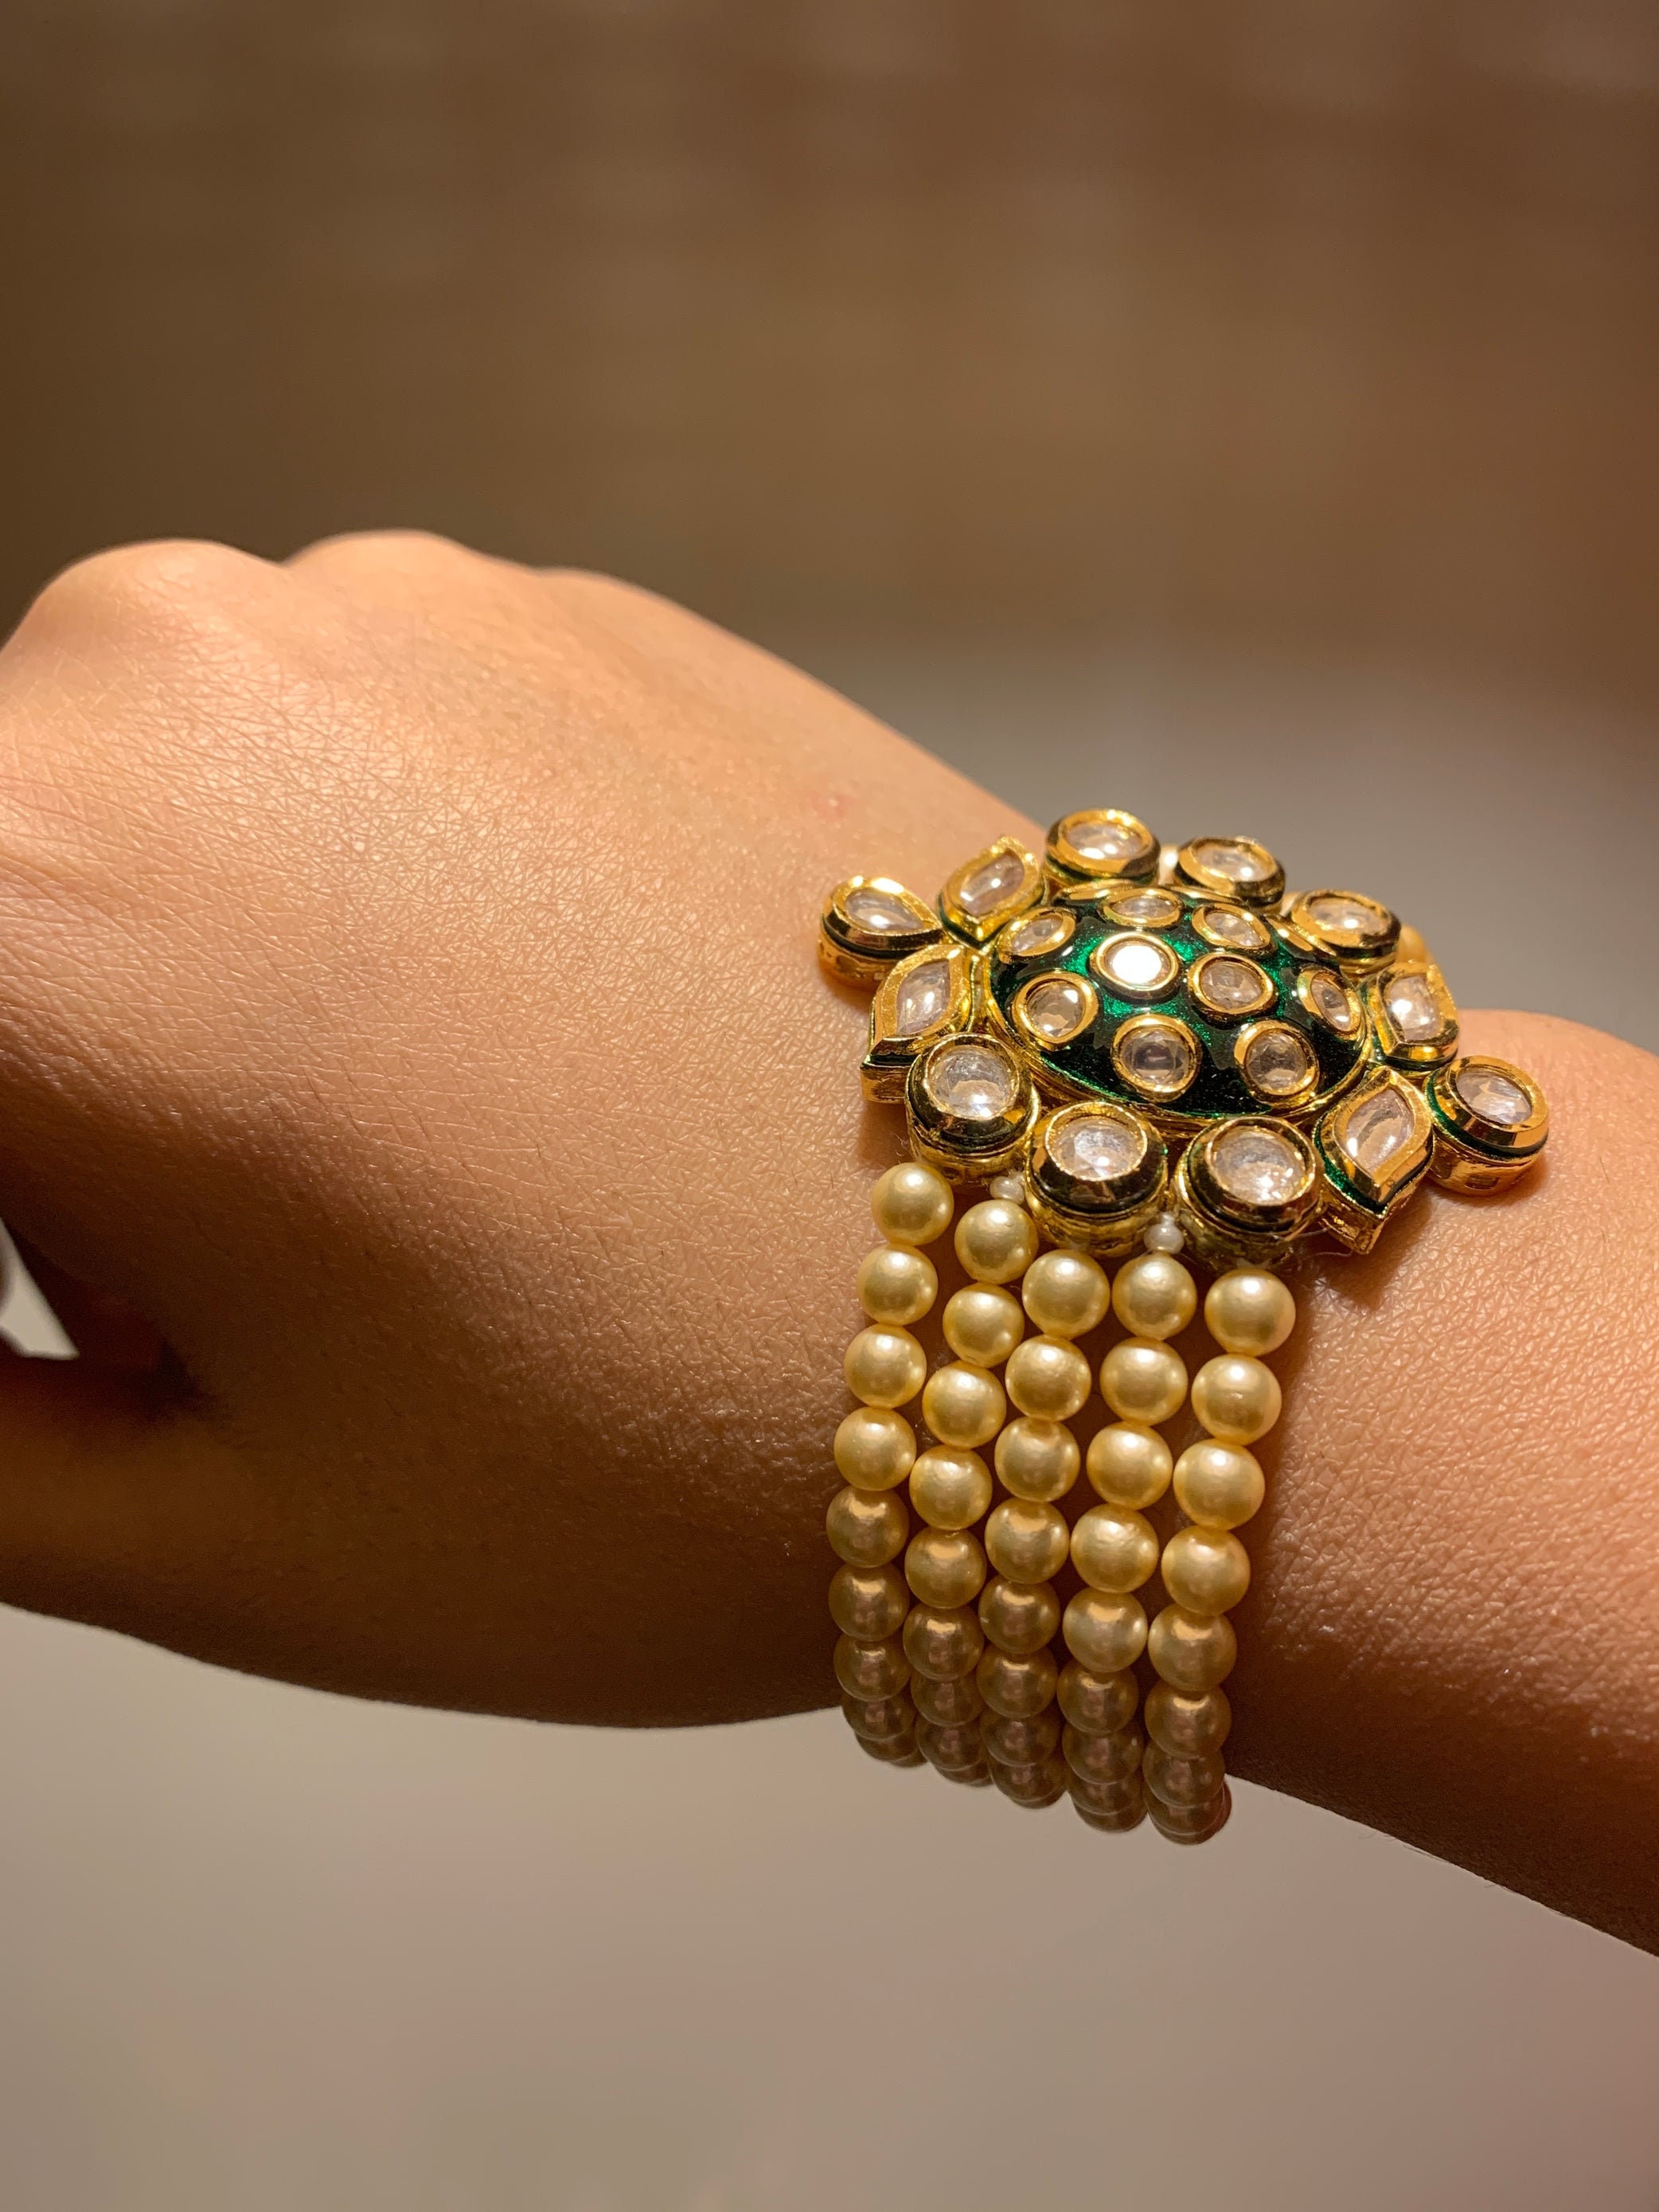 Indian Traditional Gold Plated Sparrow Design Kundan Bangle Jewelry Set  Bracelet | eBay